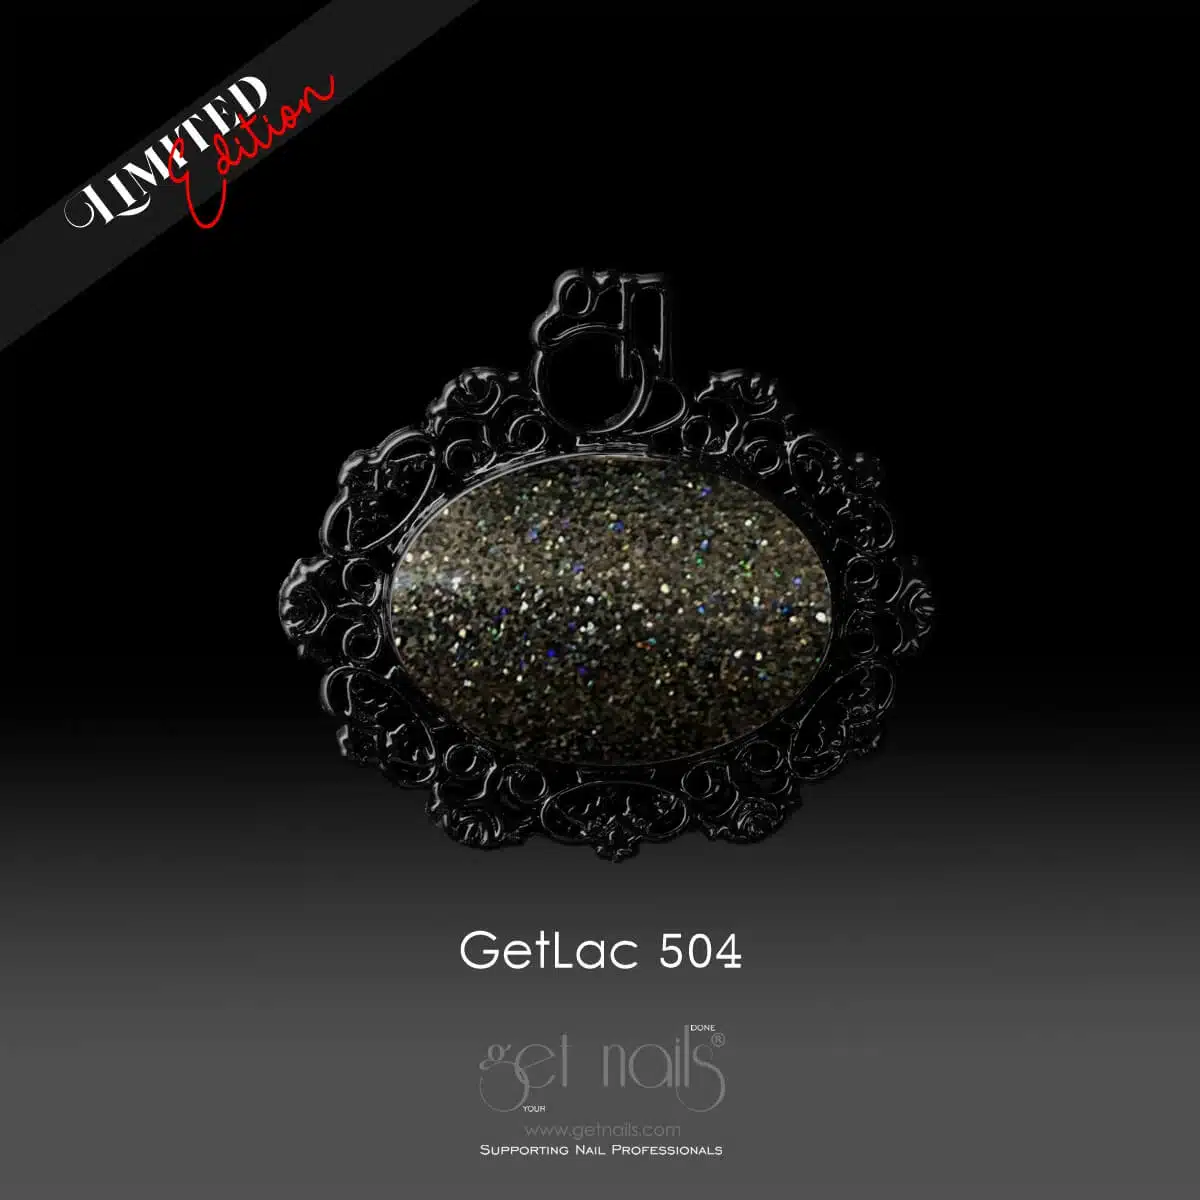 Get Nails Austria - GetLac 504 15g